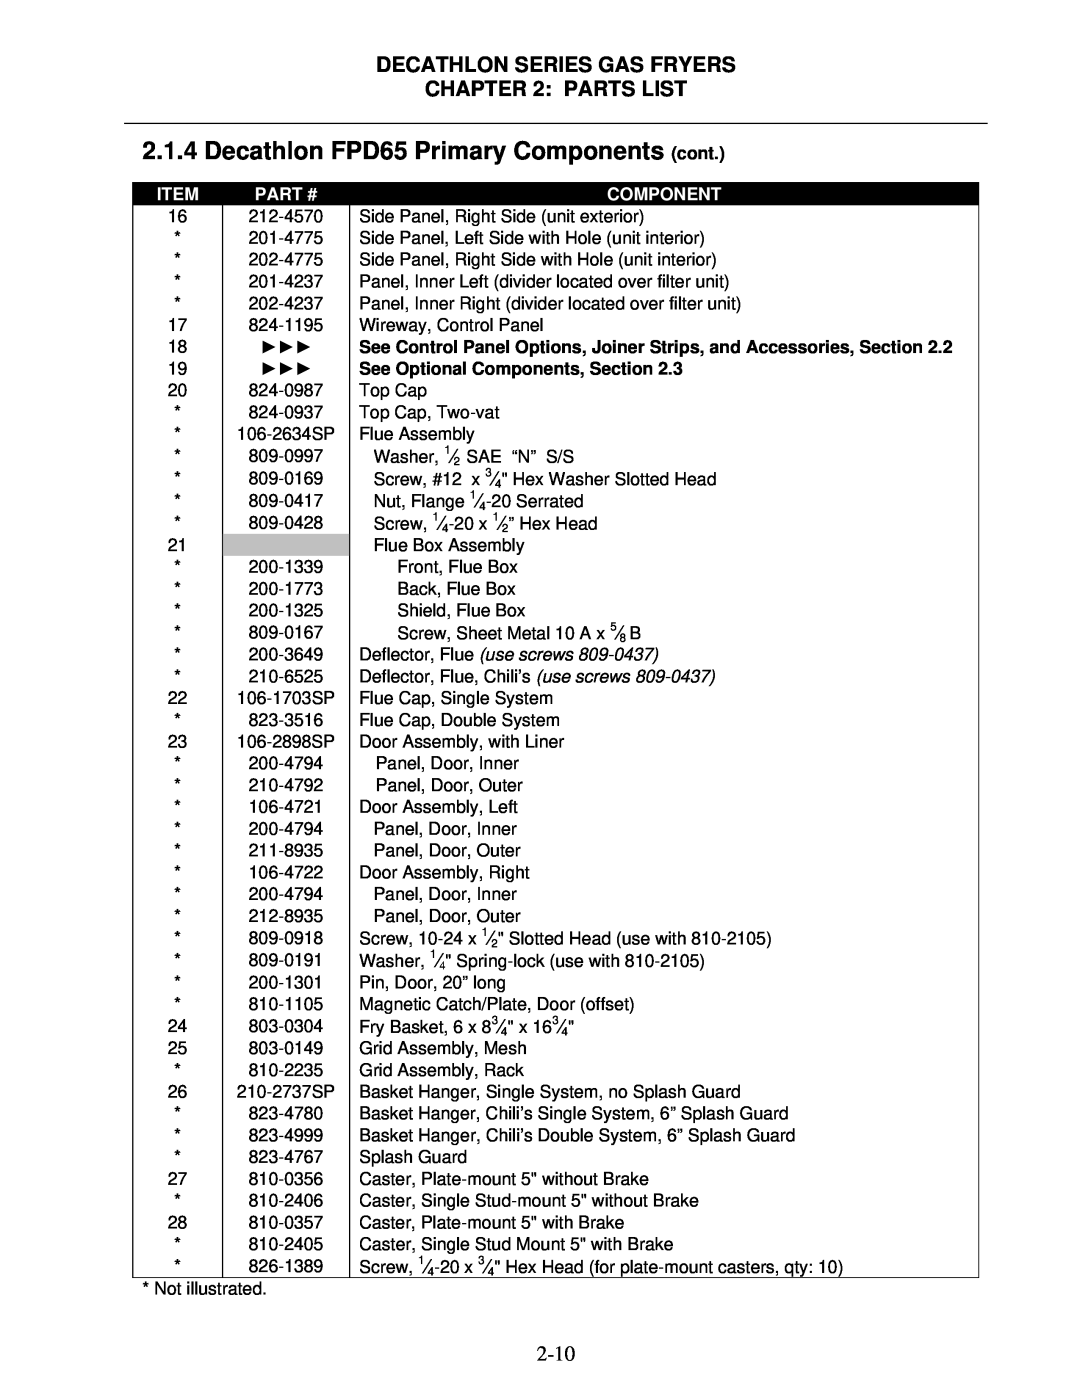 Frymaster SCFD Decathlon FPD65 Primary Components cont, Decathlon Series Gas Fryers Parts List, Item, Part #, 212-4570 